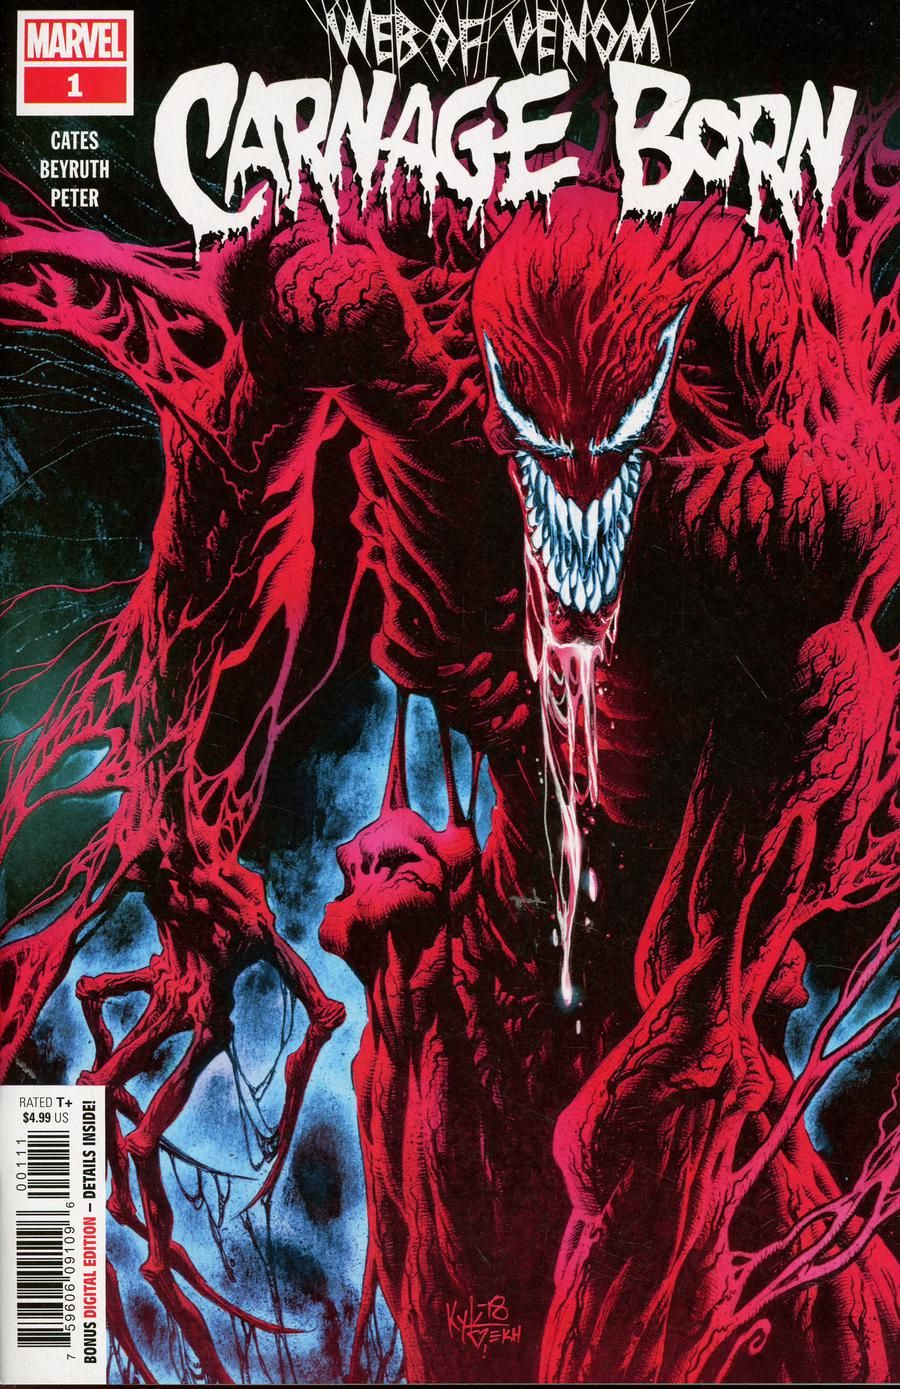 Web of Venom: Carnage Born #1 Comic